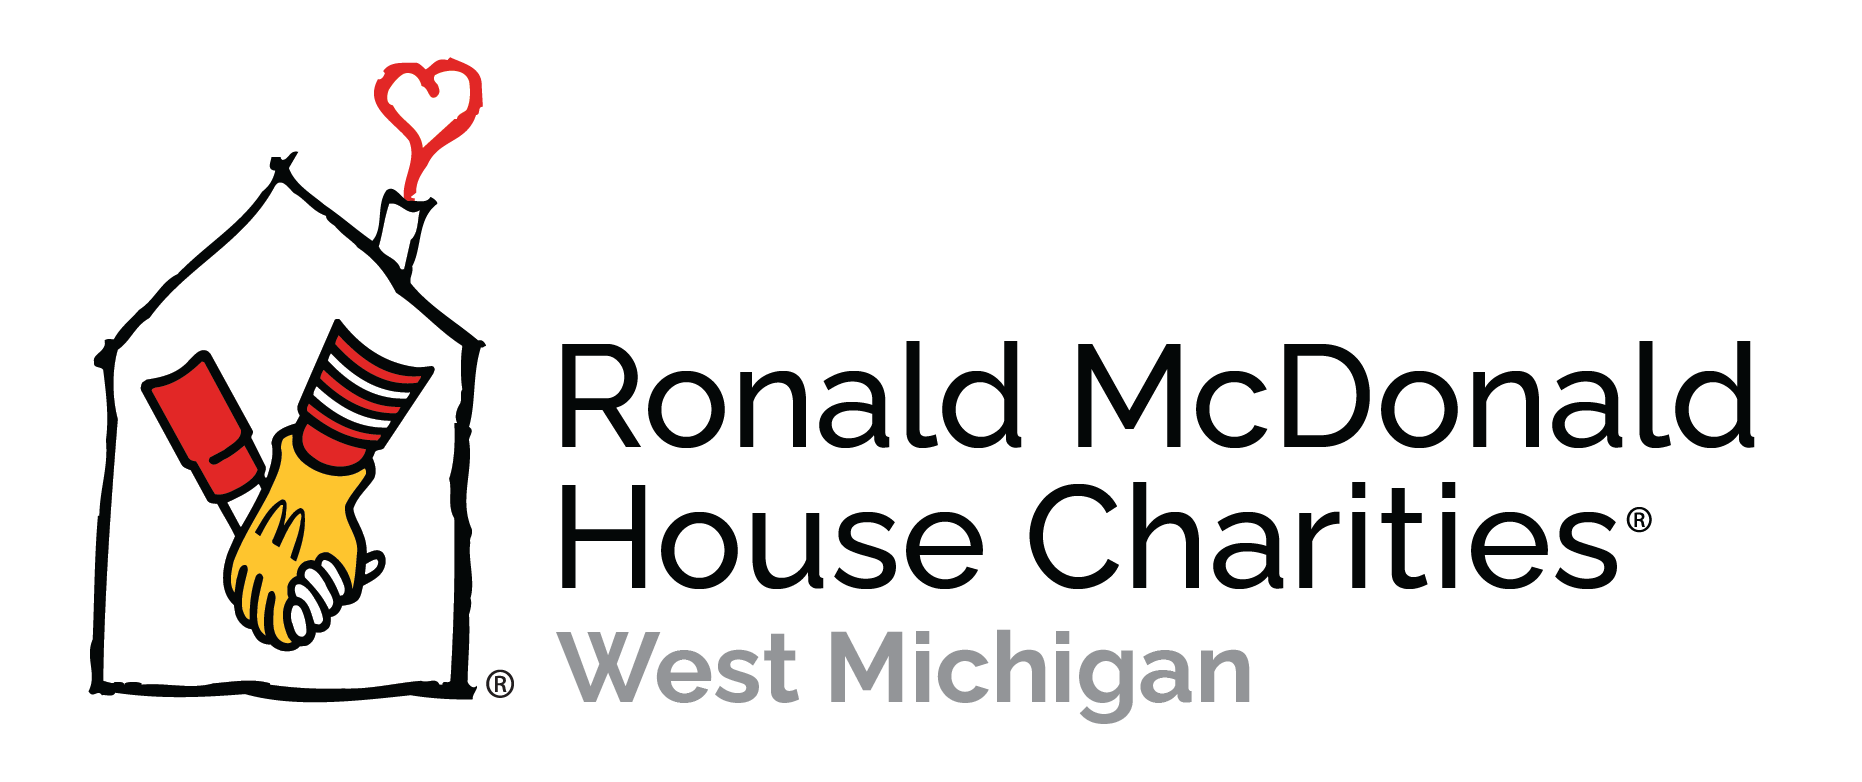 Ronald McDonald House of West Michigan logo